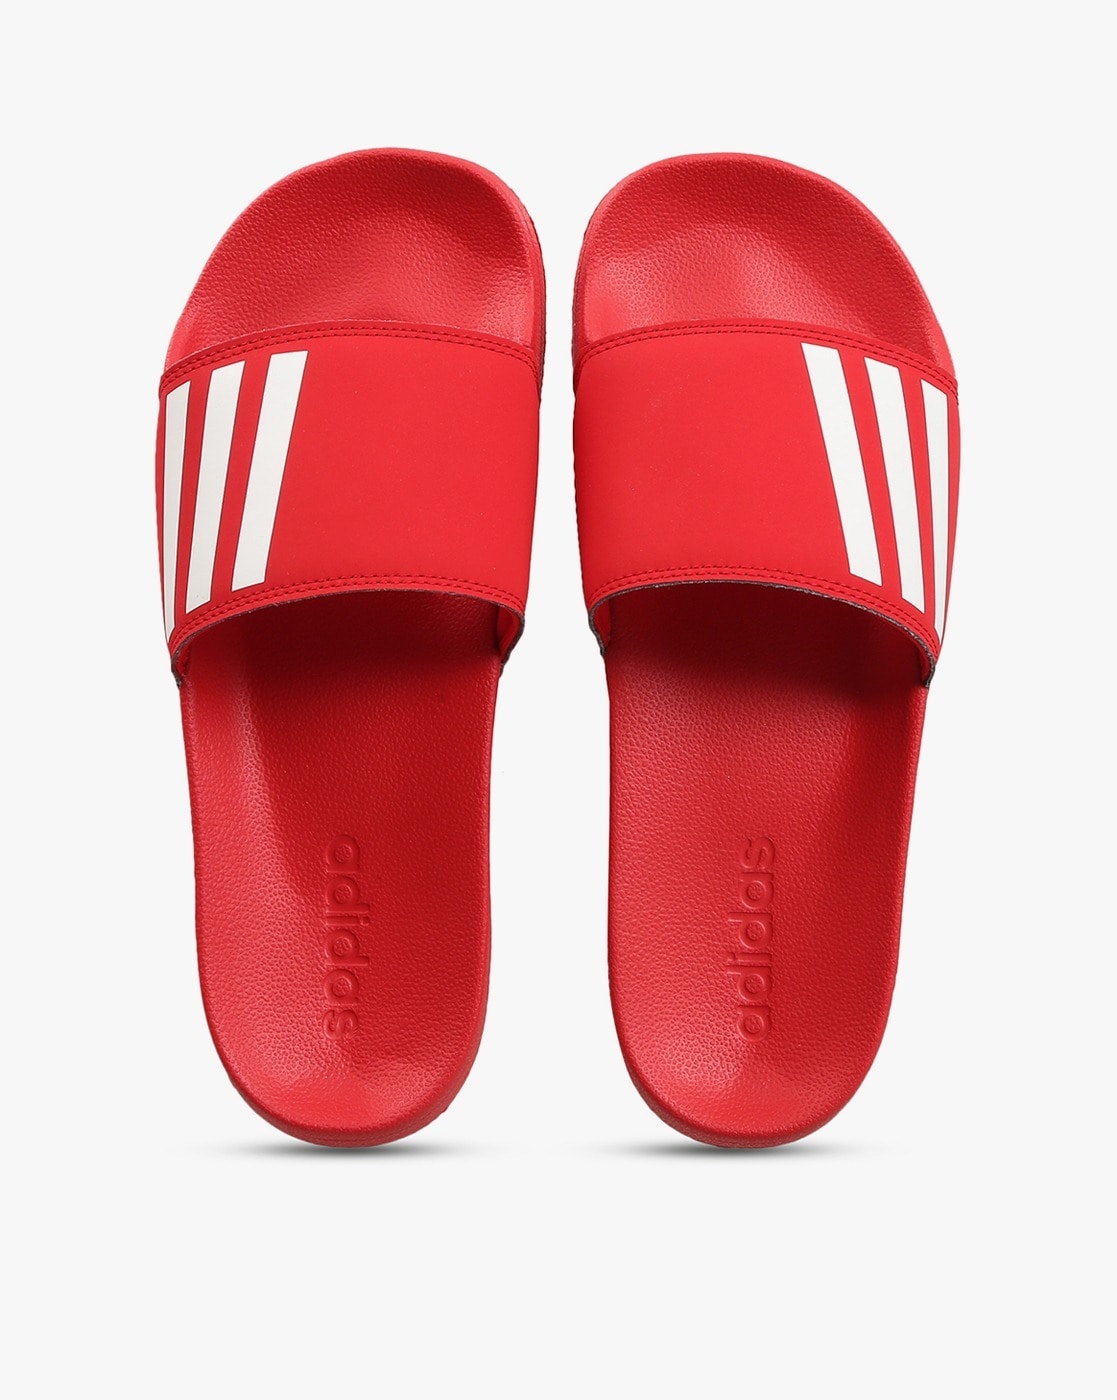 ADIDAS SLIPPERS FOR BOYS | Adidas slippers, Slippers, Clothes design